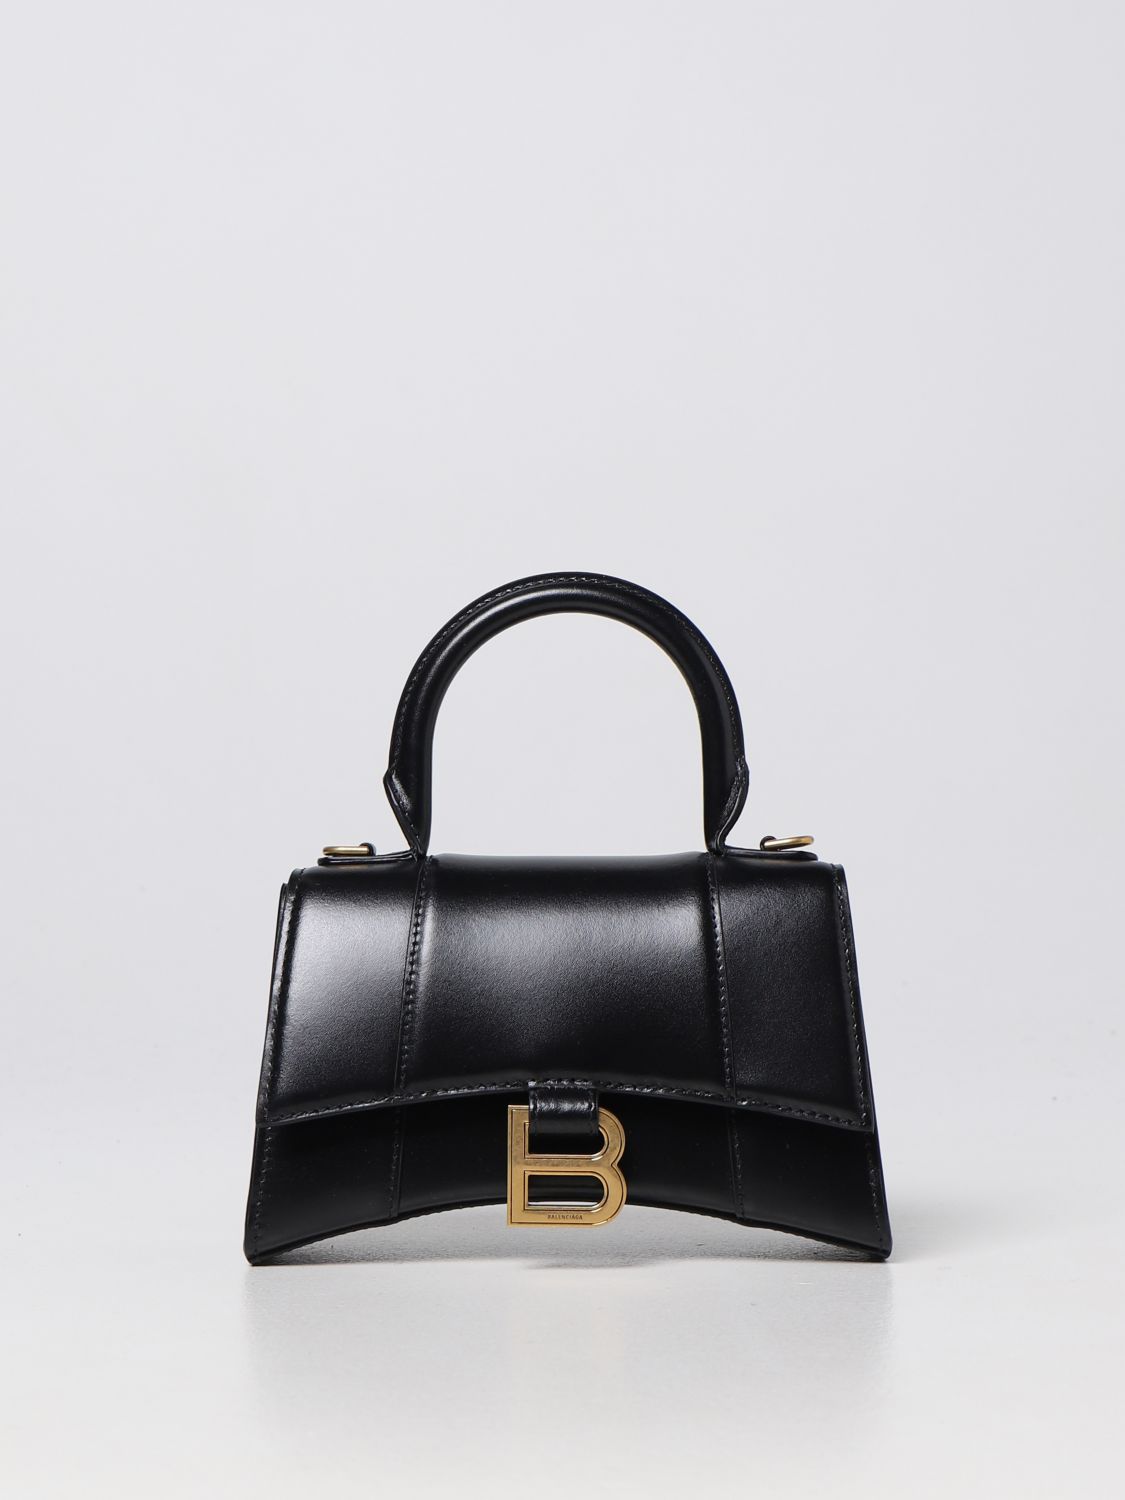 BALENCIAGA: Hourglass Top XS bag in leather Black | Balenciaga mini bag 5928331QJ4M online on GIGLIO.COM